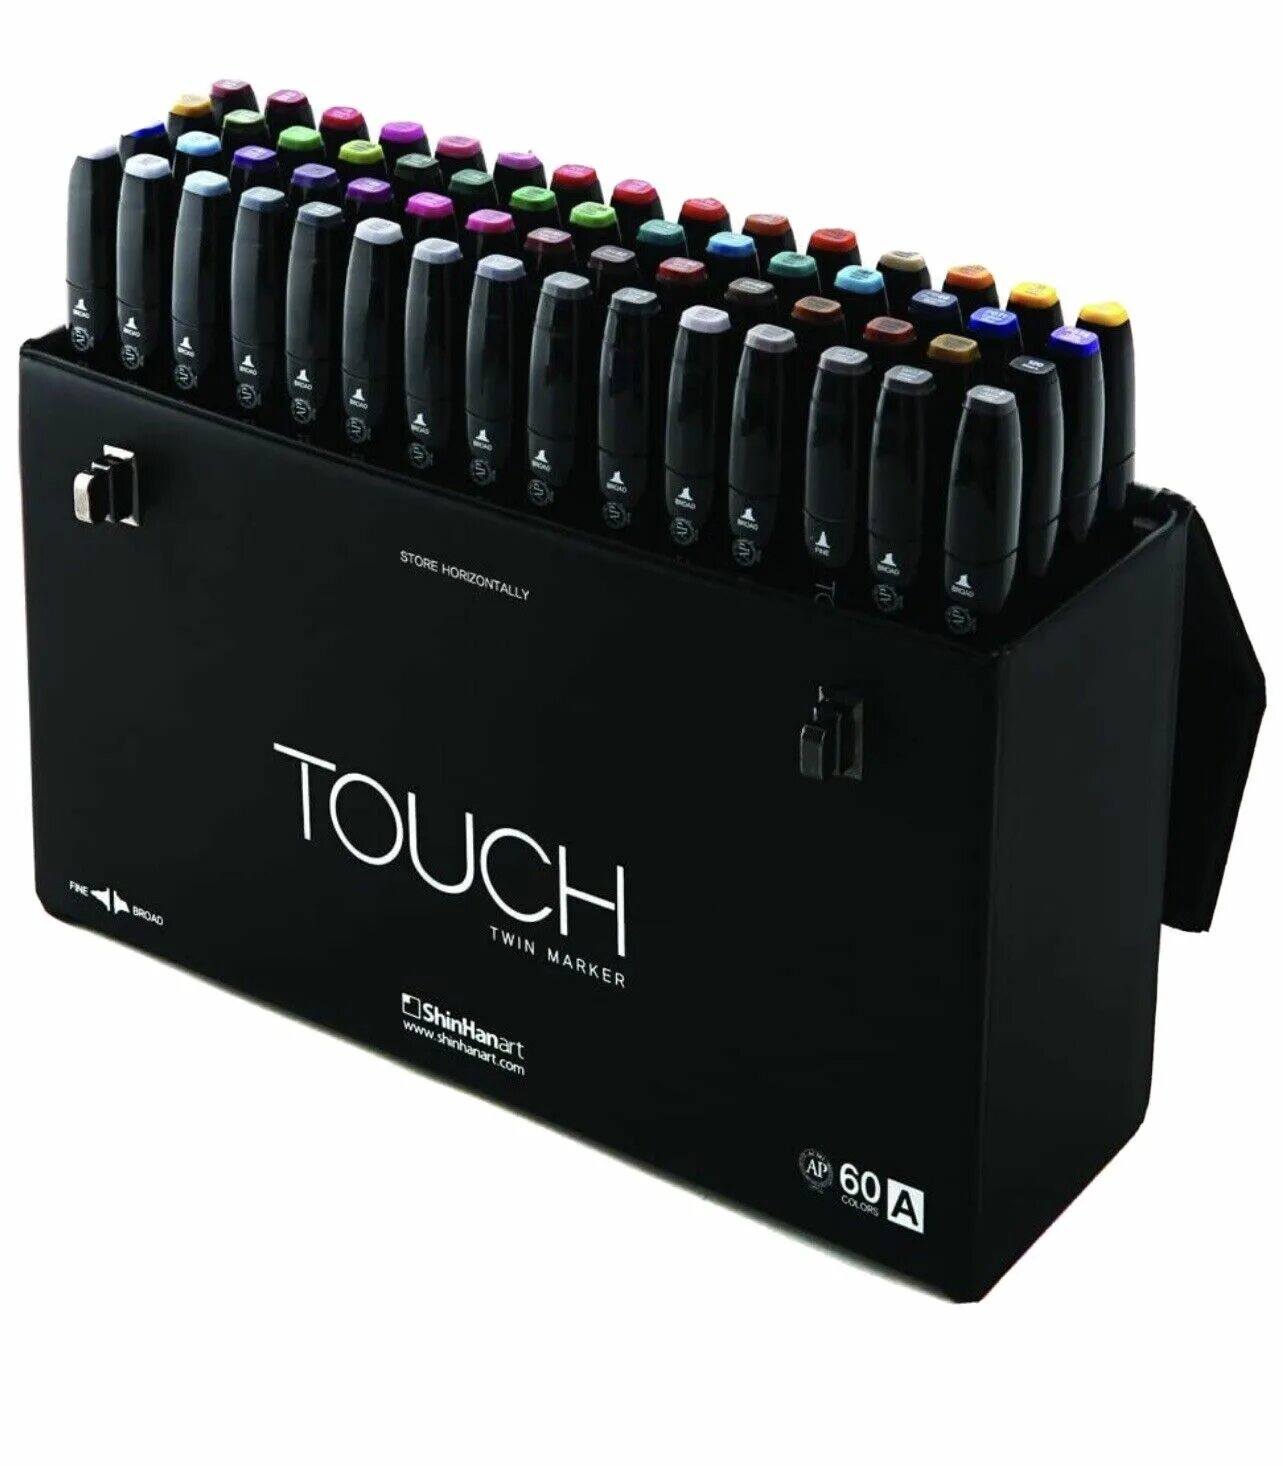 Маркеры общества. Набор маркеров Touch Raven Twin. Touch Twin Brush маркер. Twin Marker 60 цветов. Маркеры Touch lecai 60 цветов.